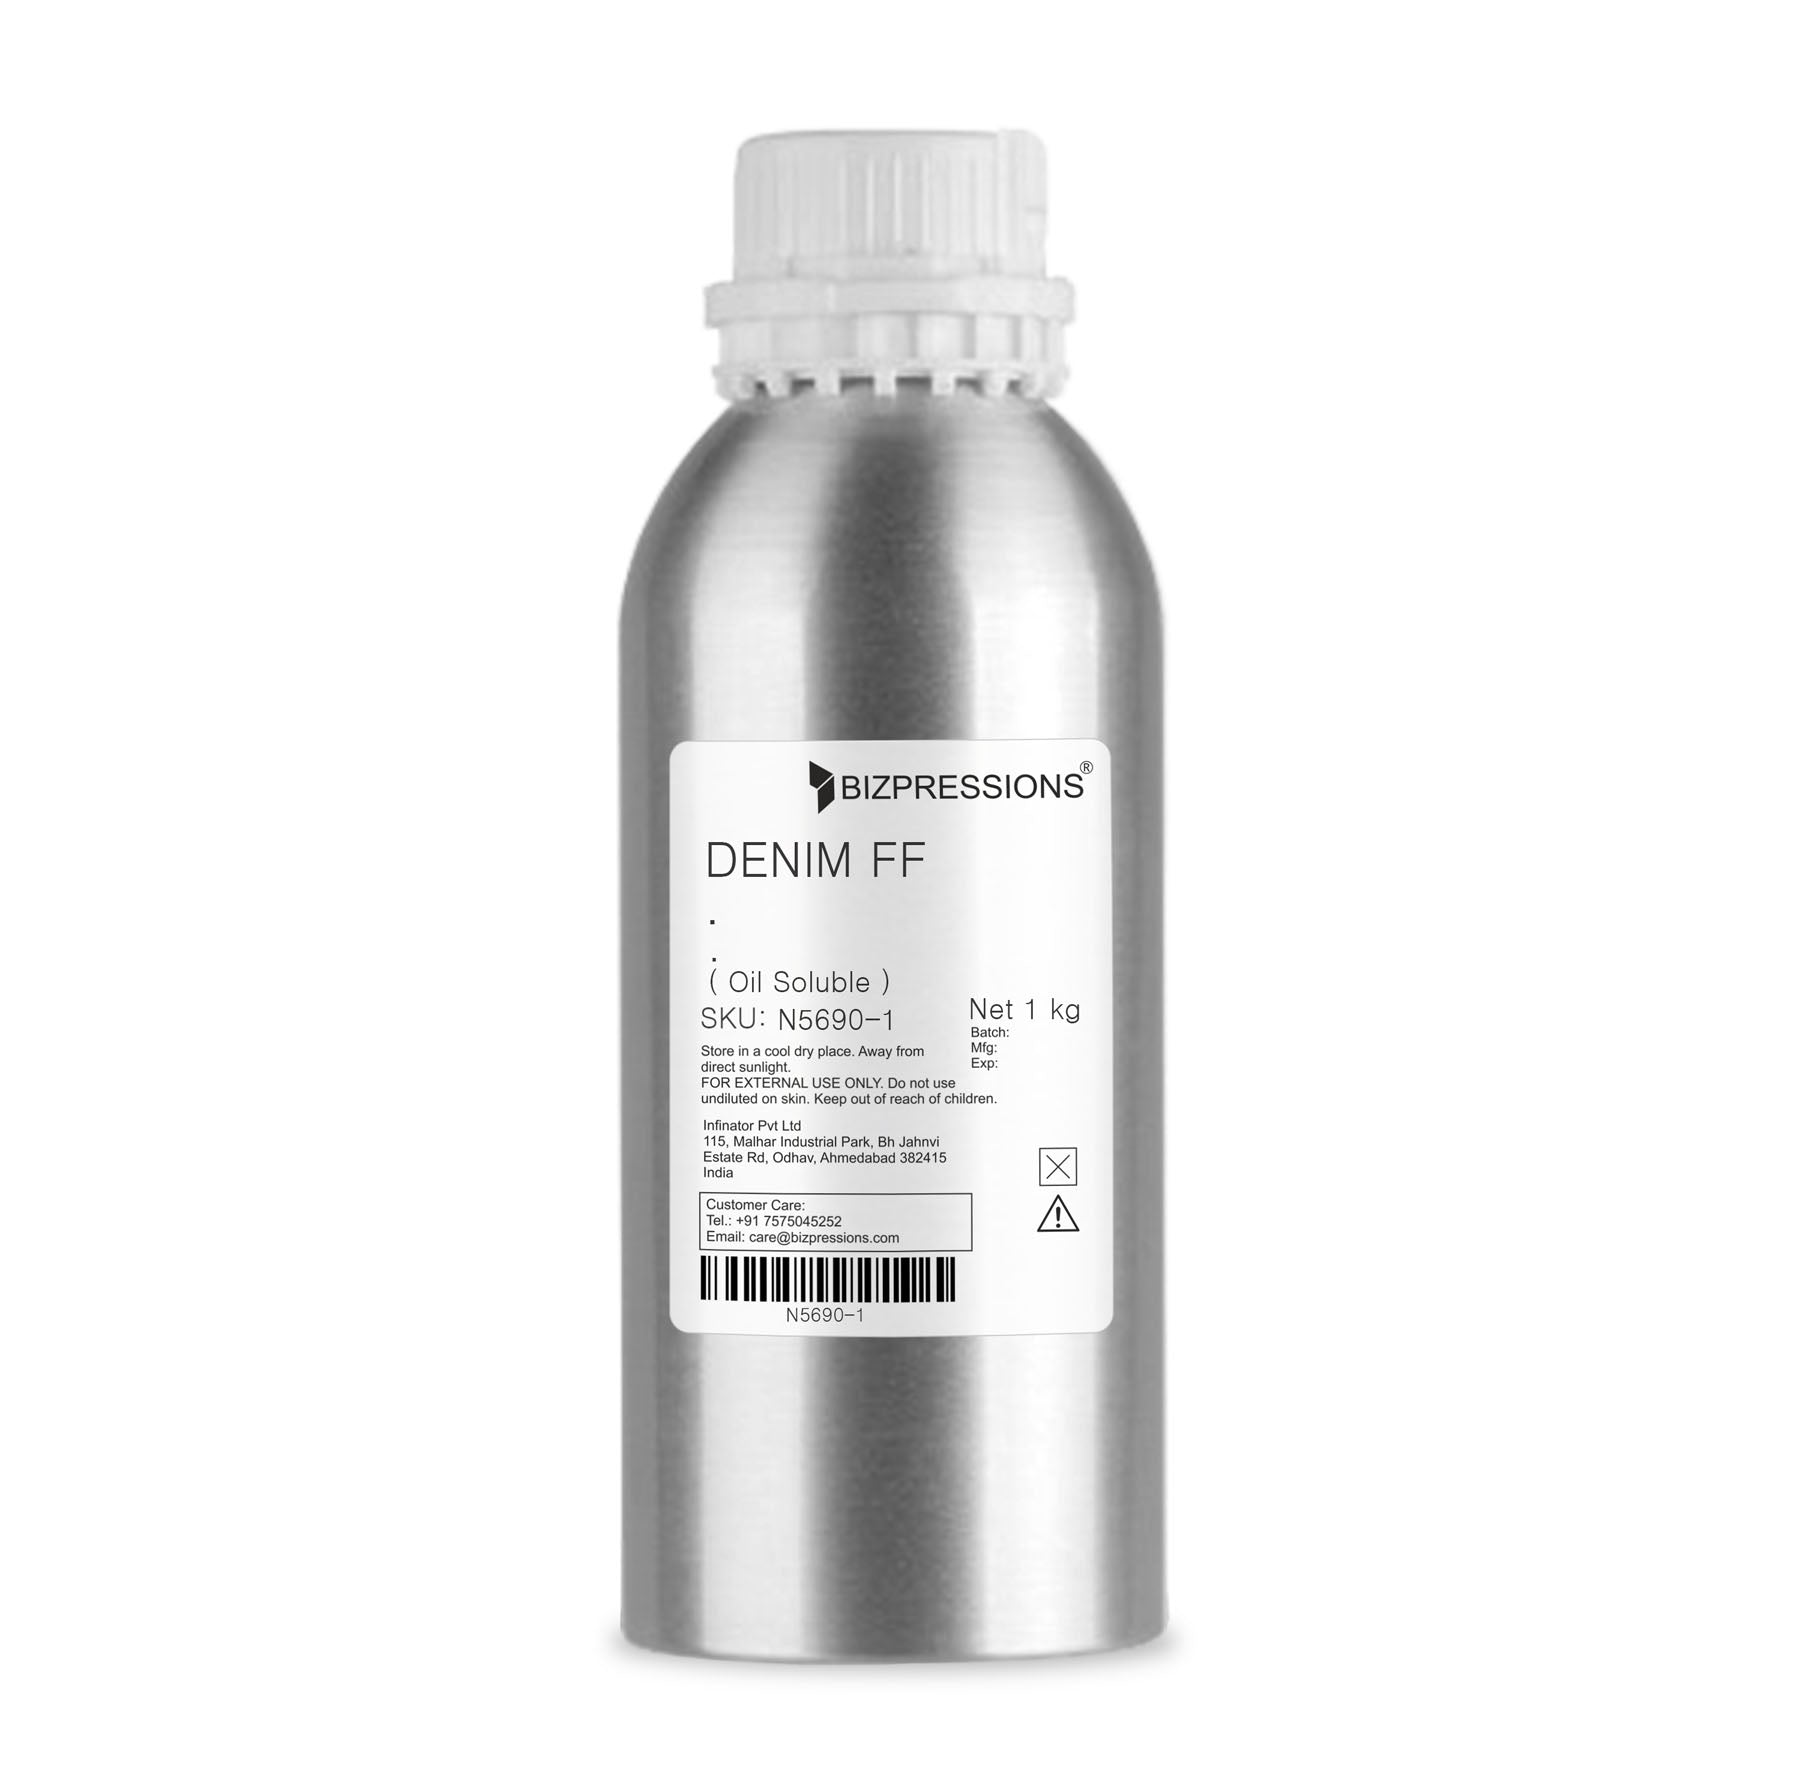 DENIM FF - Fragrance ( Oil Soluble ) - 1 kg